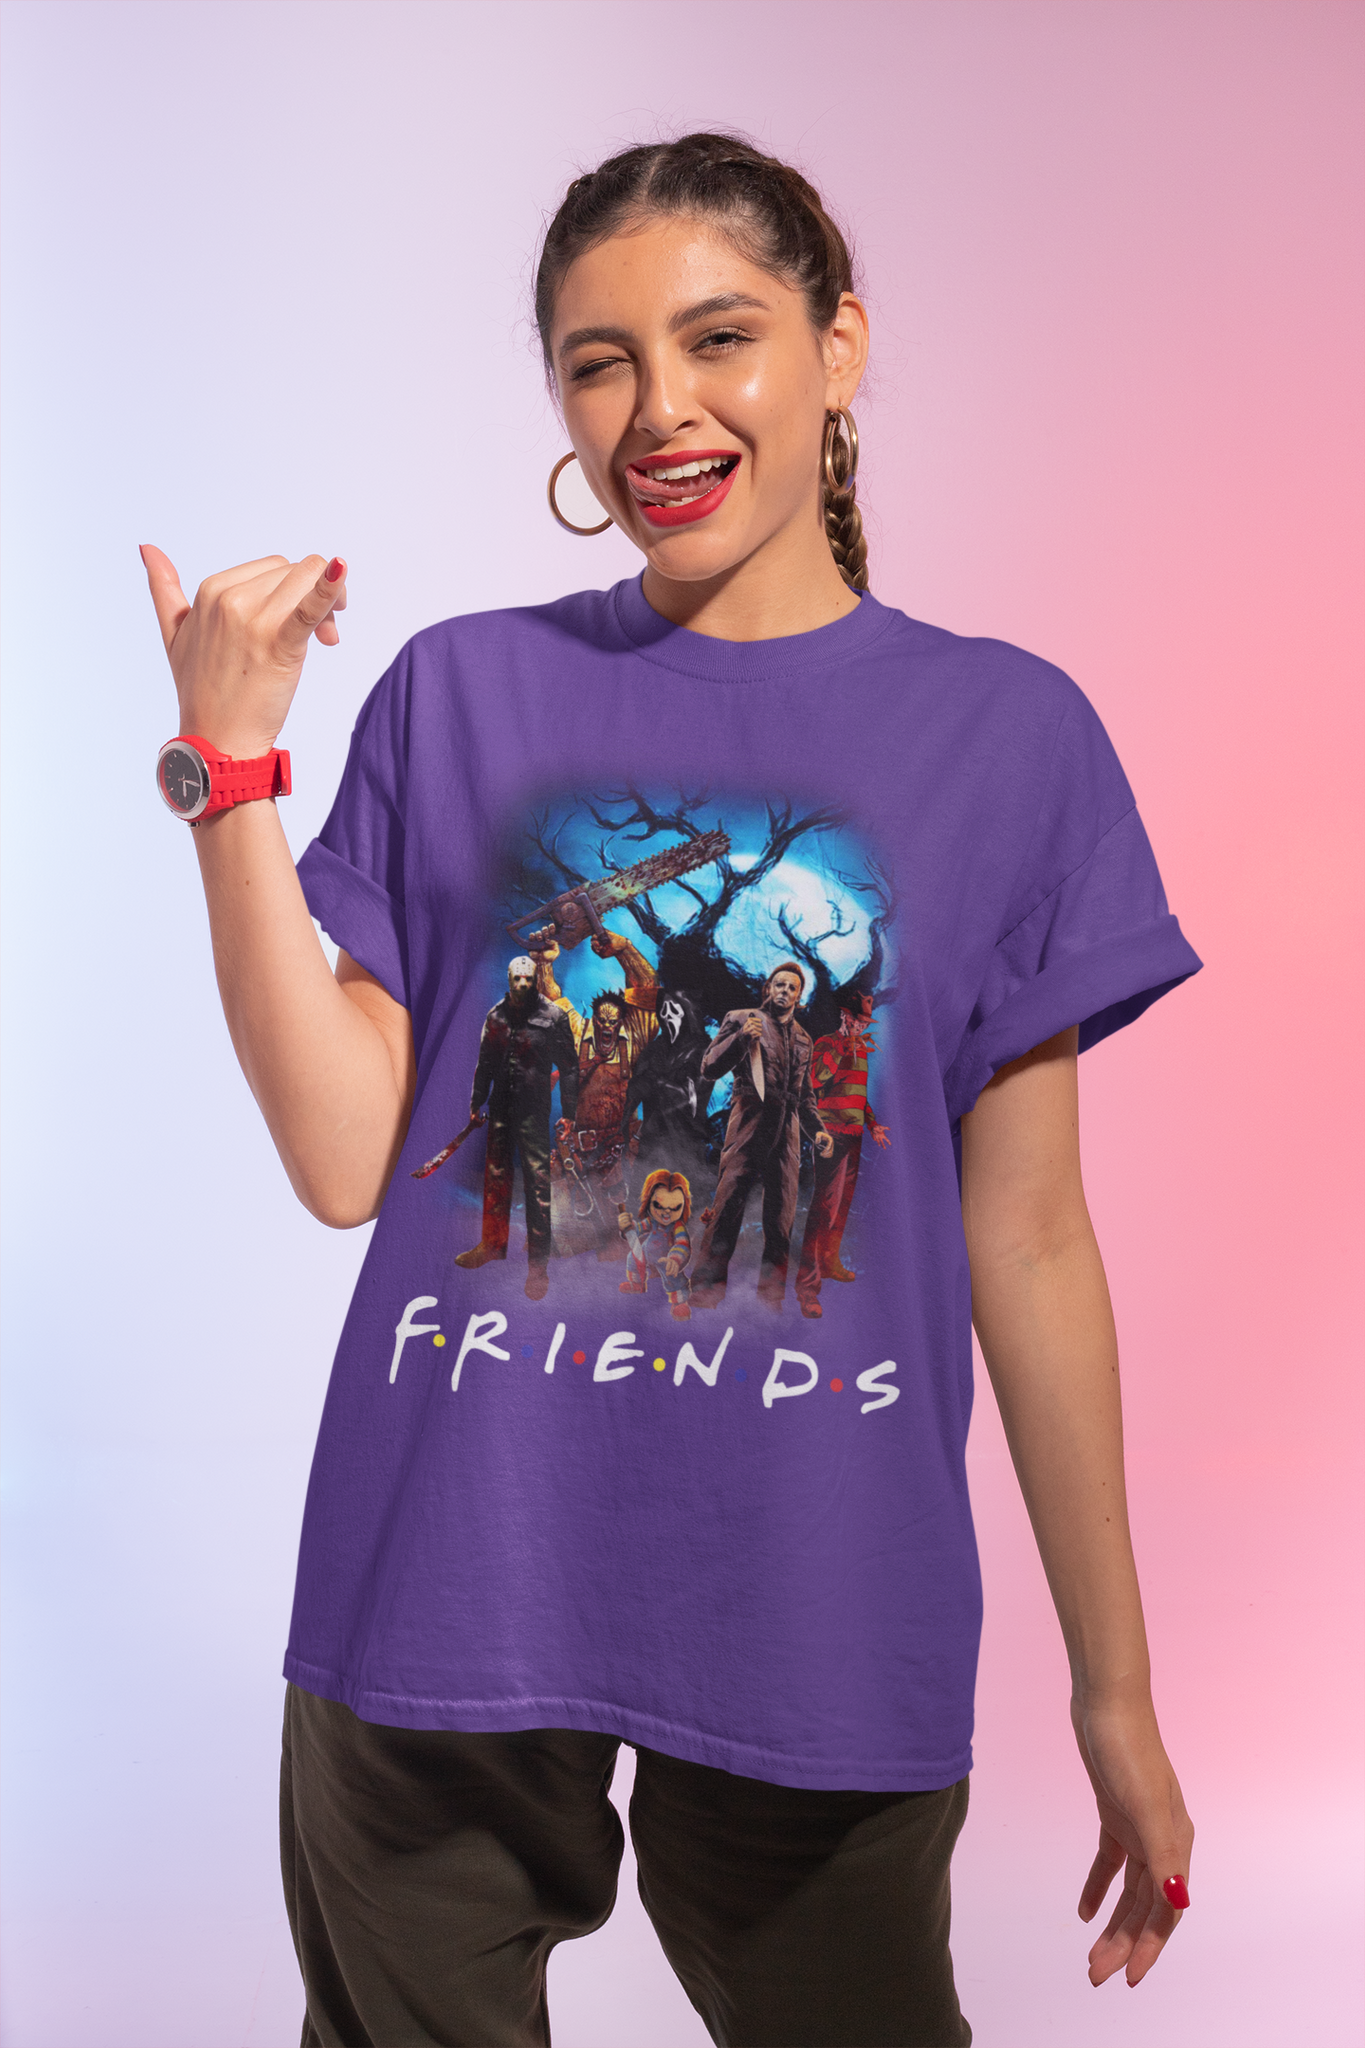 Horror Movie Characters T Shirt, Leatherface Freddy Krueger Chucky Tshirt, Horror Character Friends Shirt, Halloween Gifts